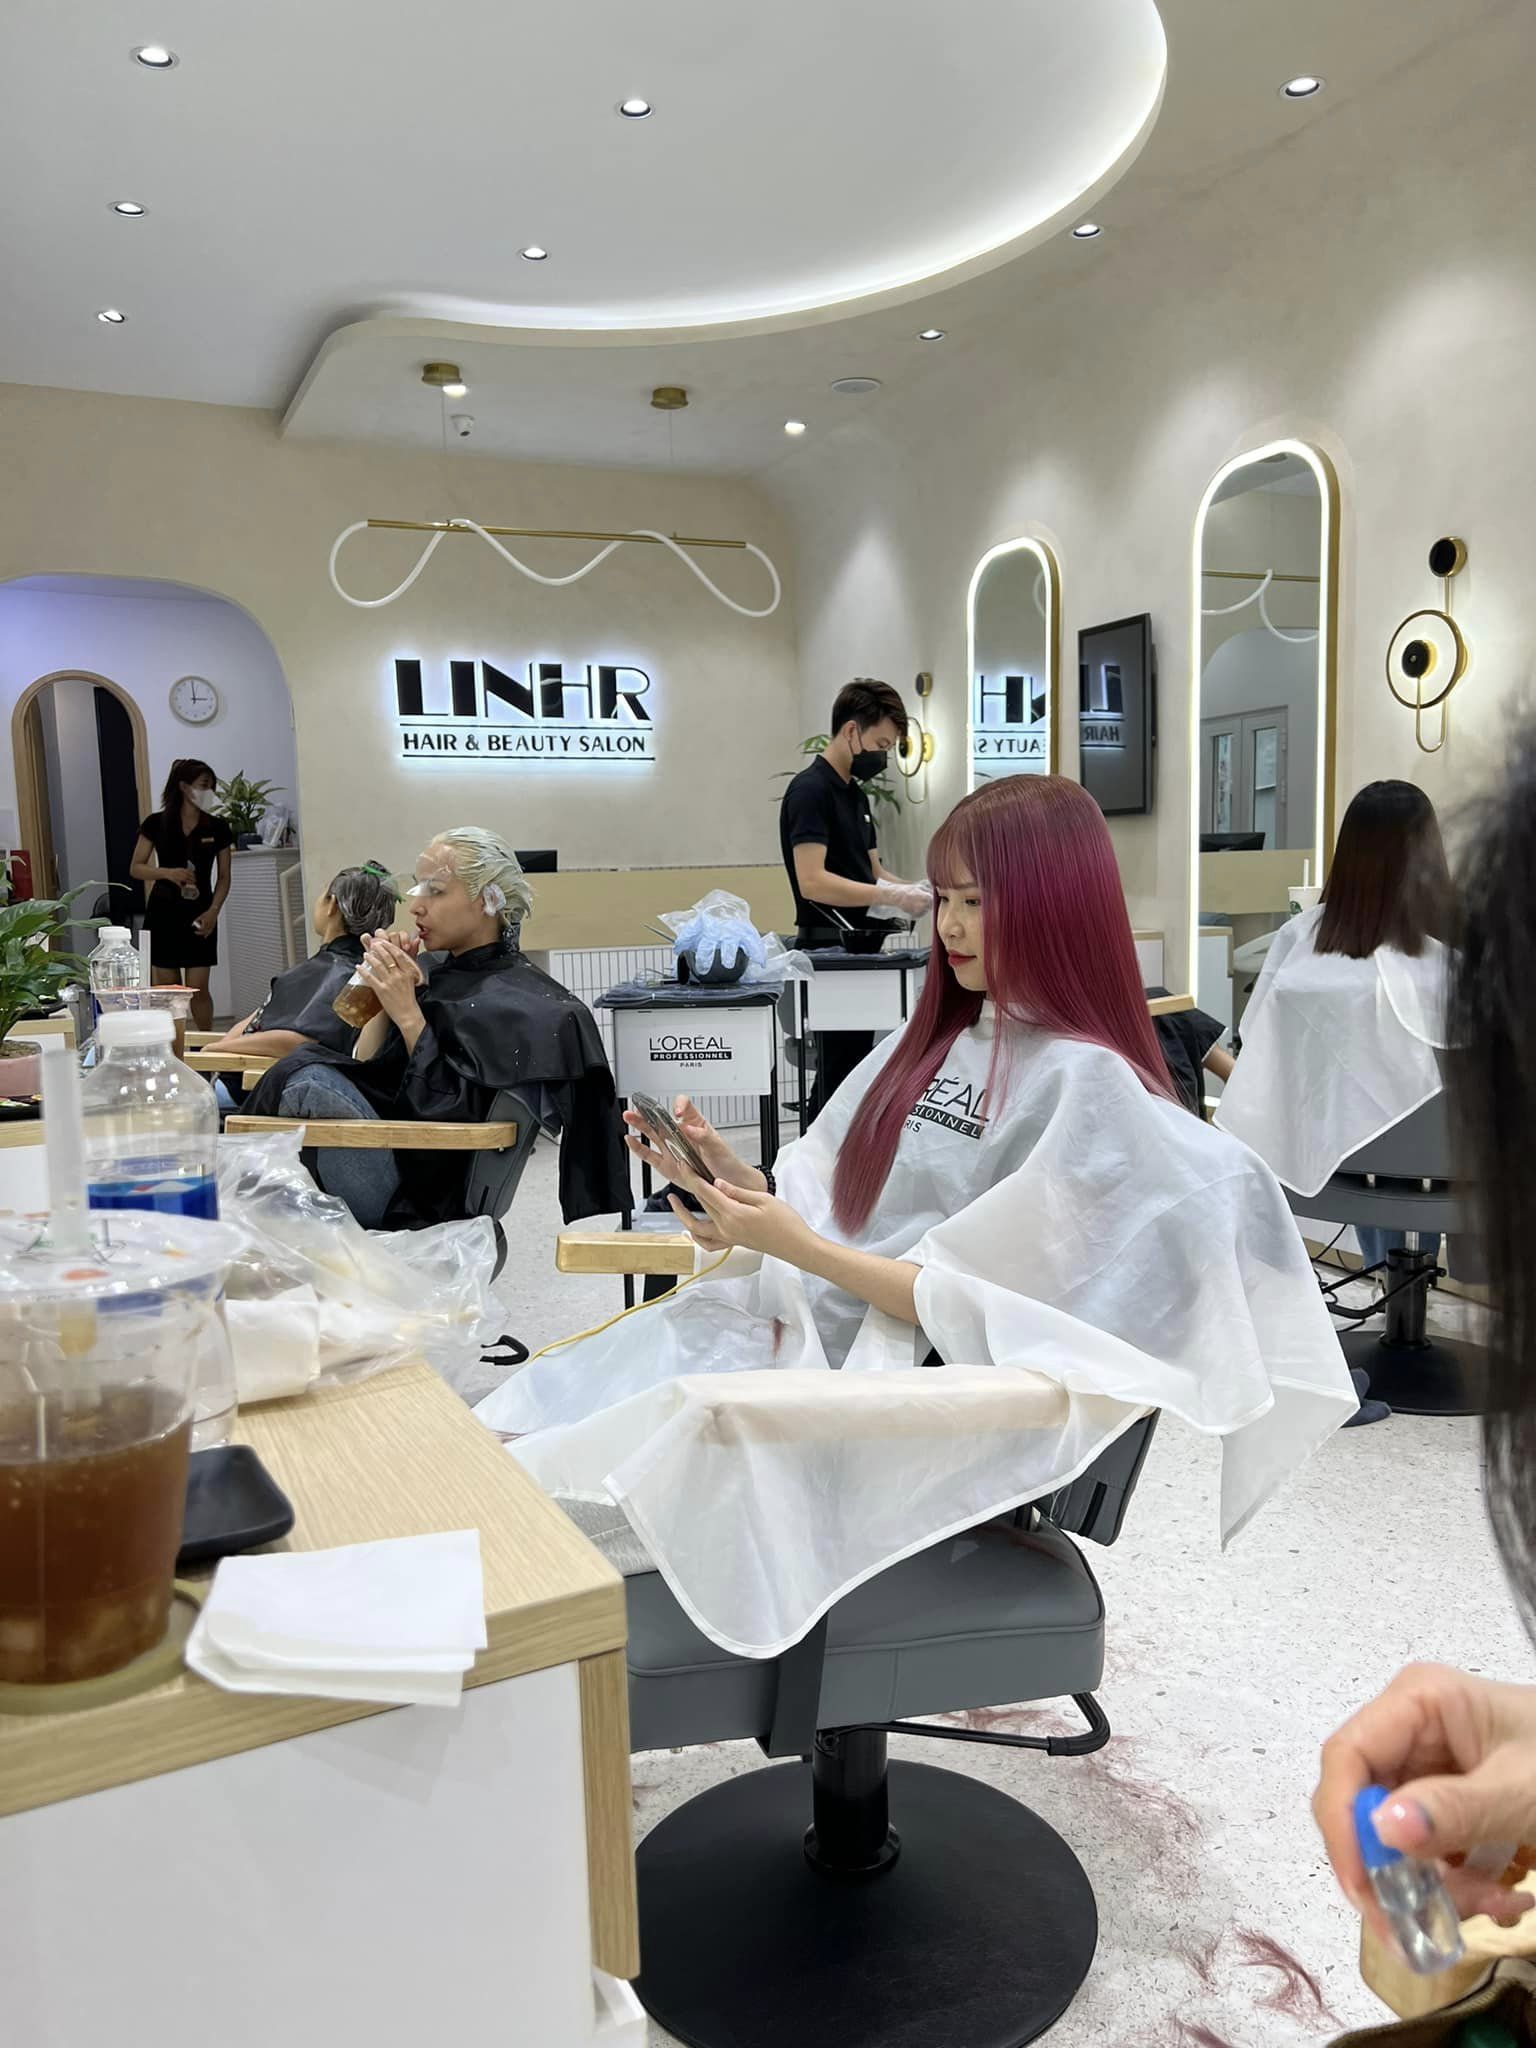 LinhR Hair & Beauty Salon ảnh 1